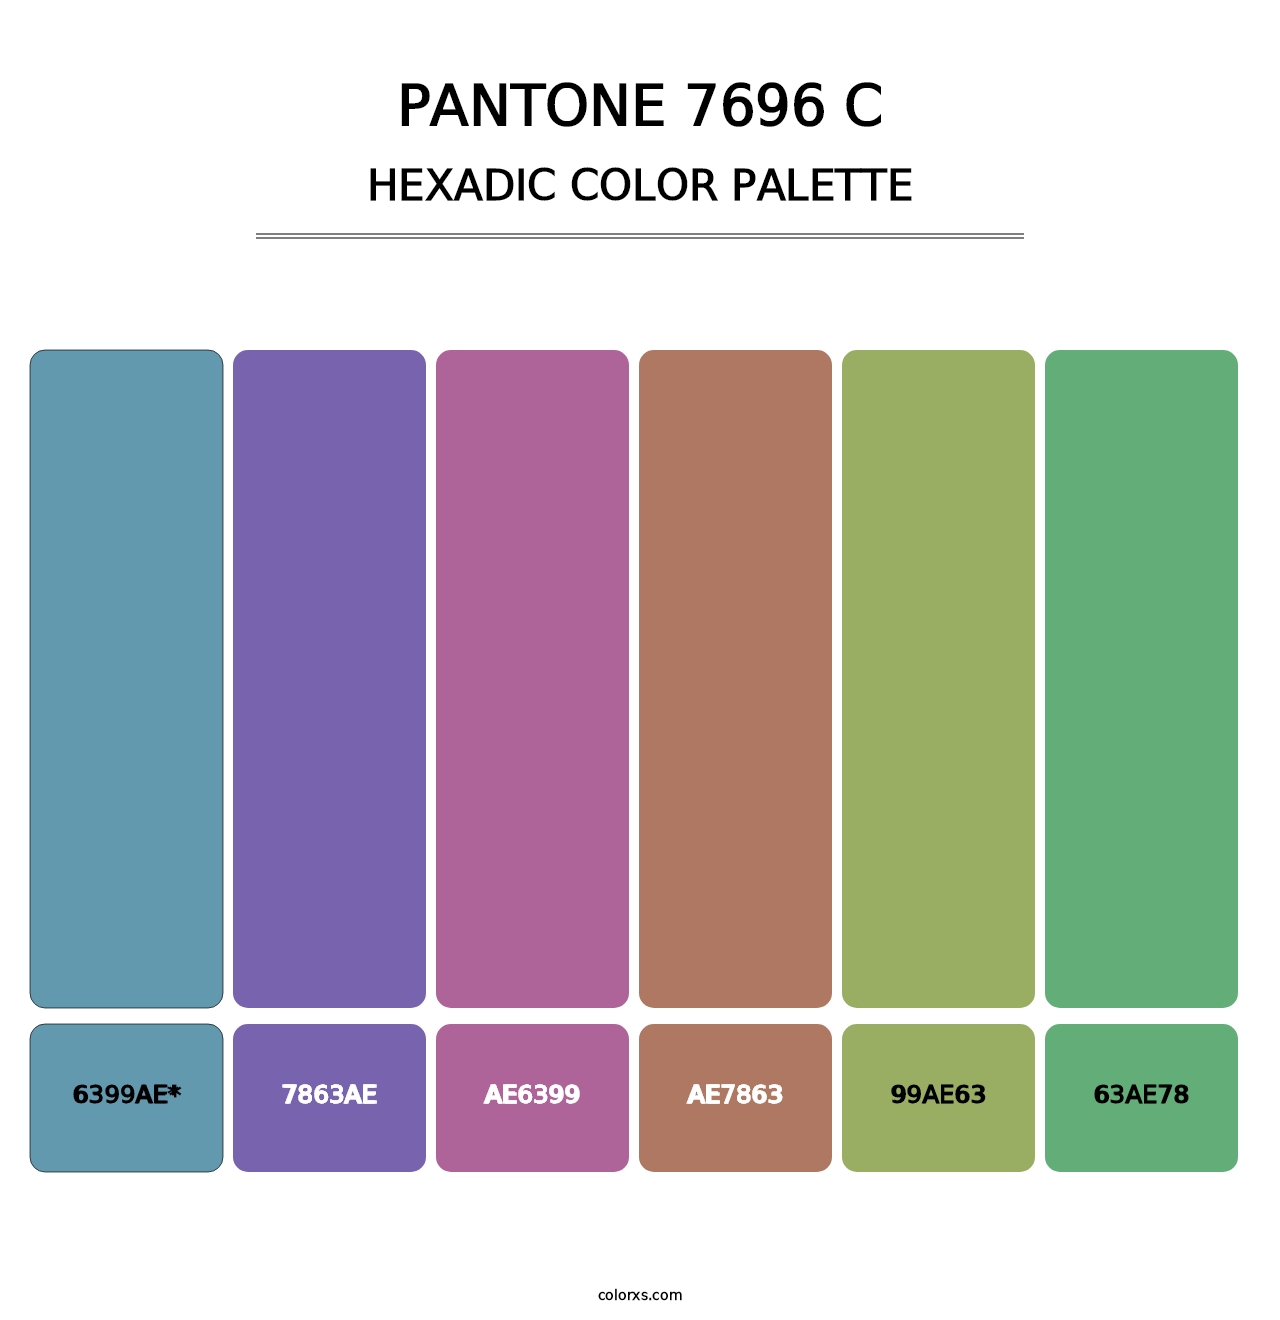 PANTONE 7696 C - Hexadic Color Palette